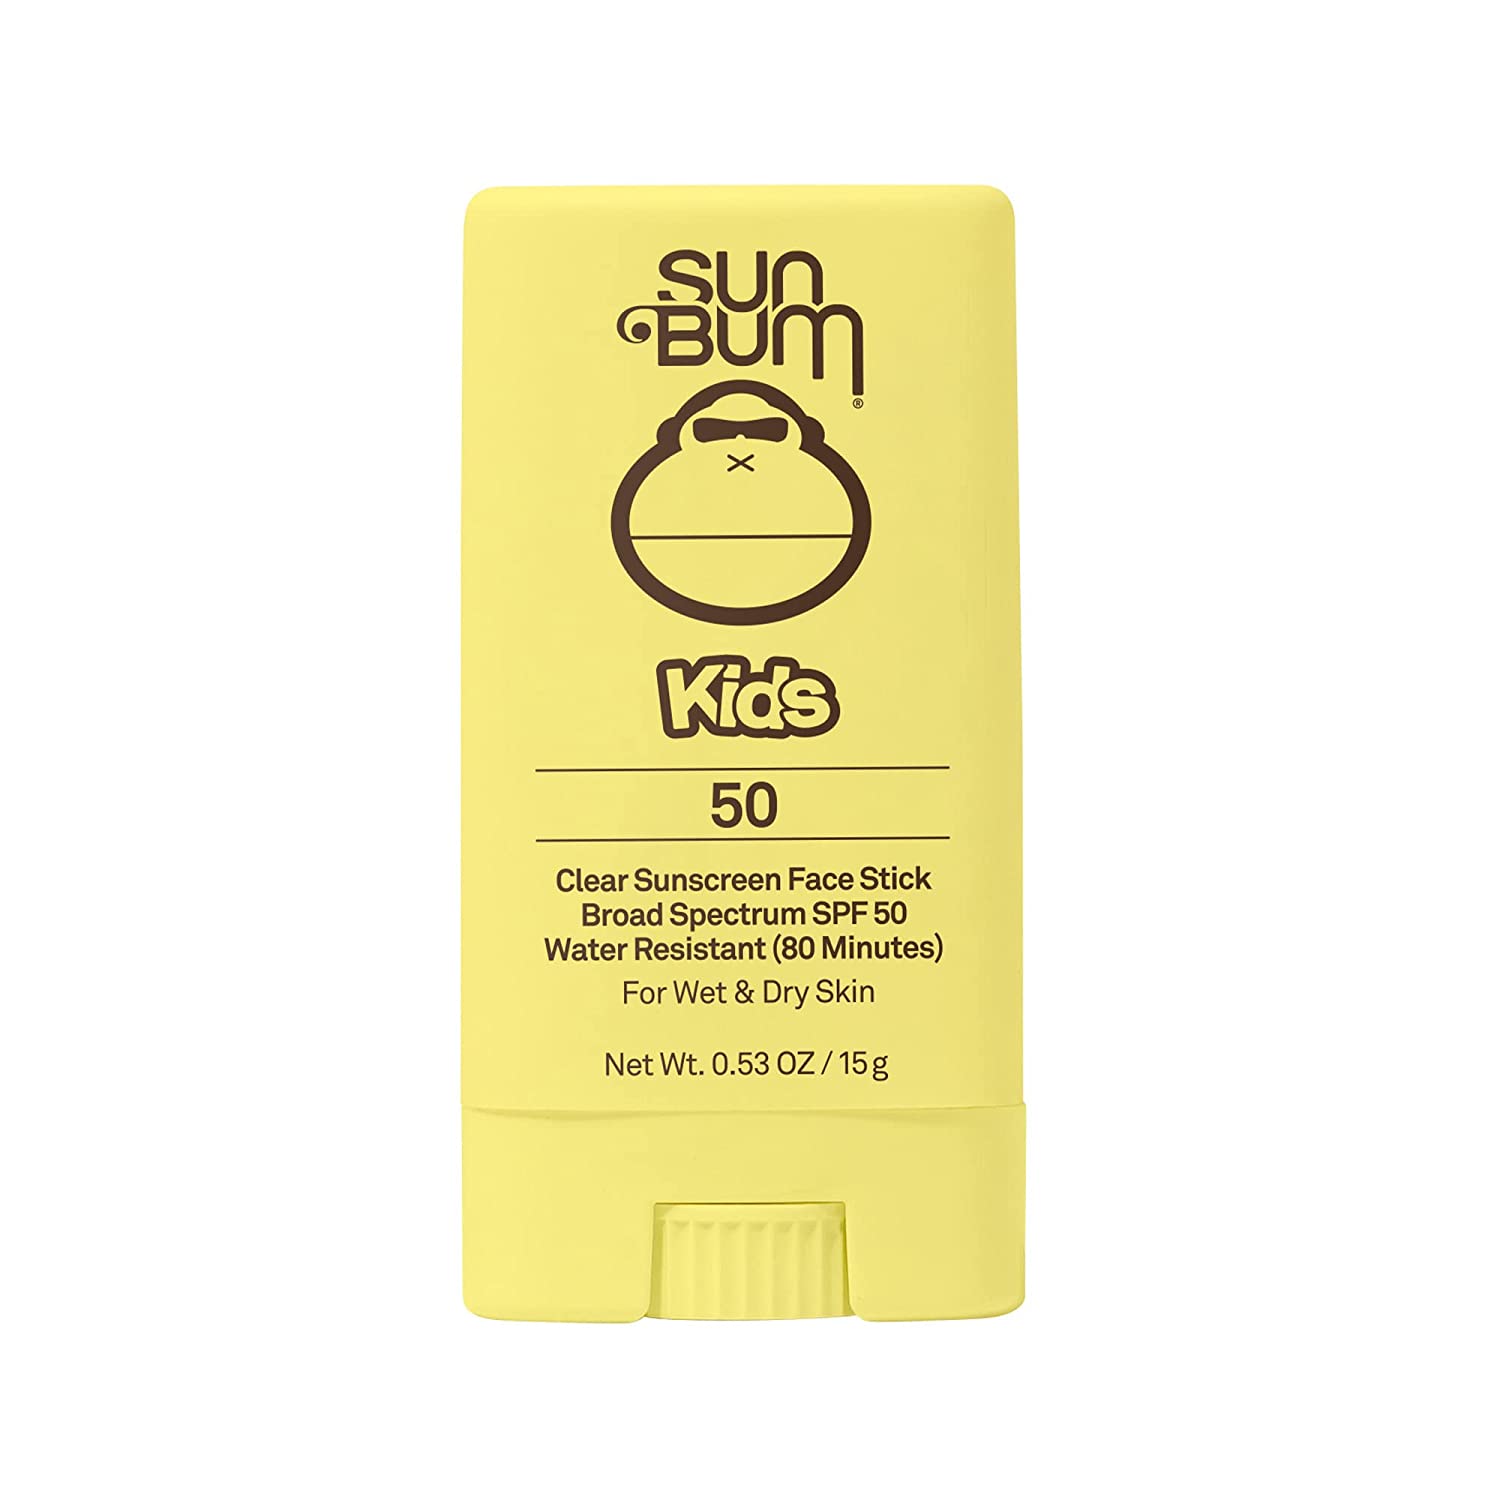 Sun Bum Clear Sunscreen Face Stick SPF 50 Water Resistant (80 Minutes)